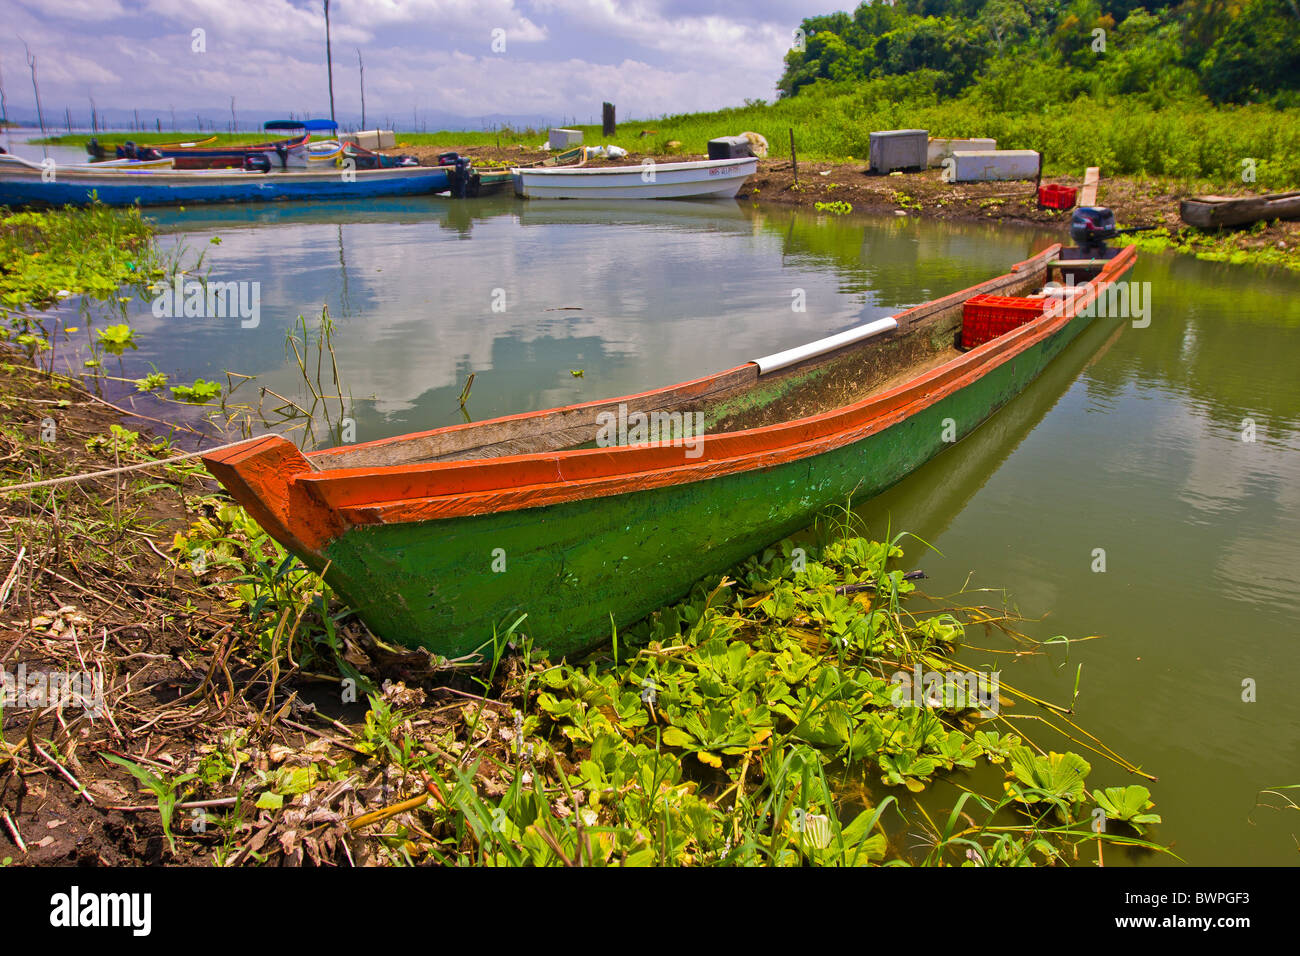 LAKE BAYANO, PANAMA - Motorized canoe, Lake Bayano, Comarca Kuna de Madungandi indigenous territory. Stock Photo